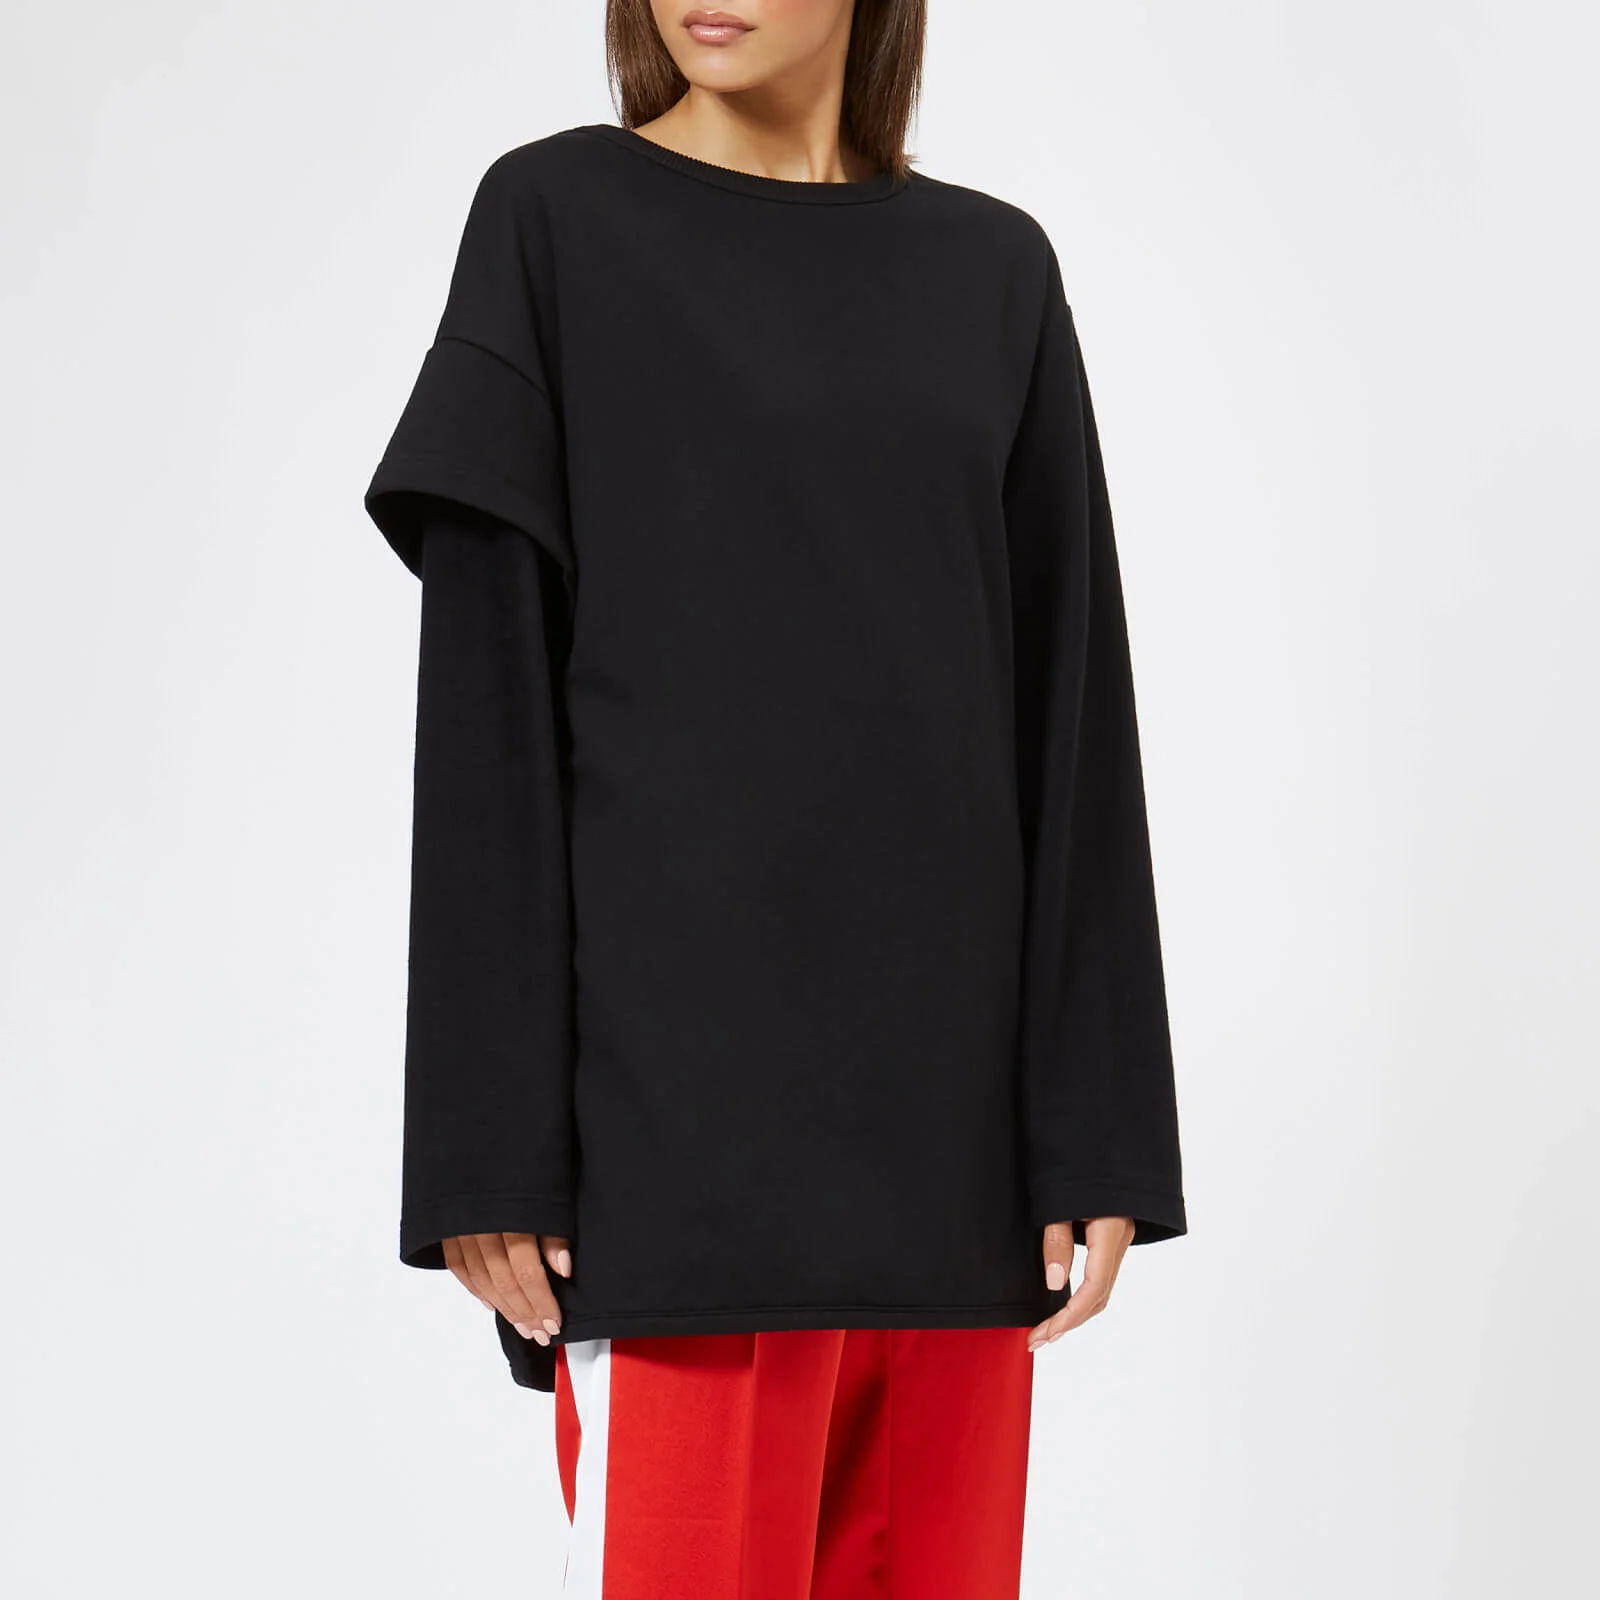 Y-3 Women's 2 Layer Fleece Sweater - Black Image 1